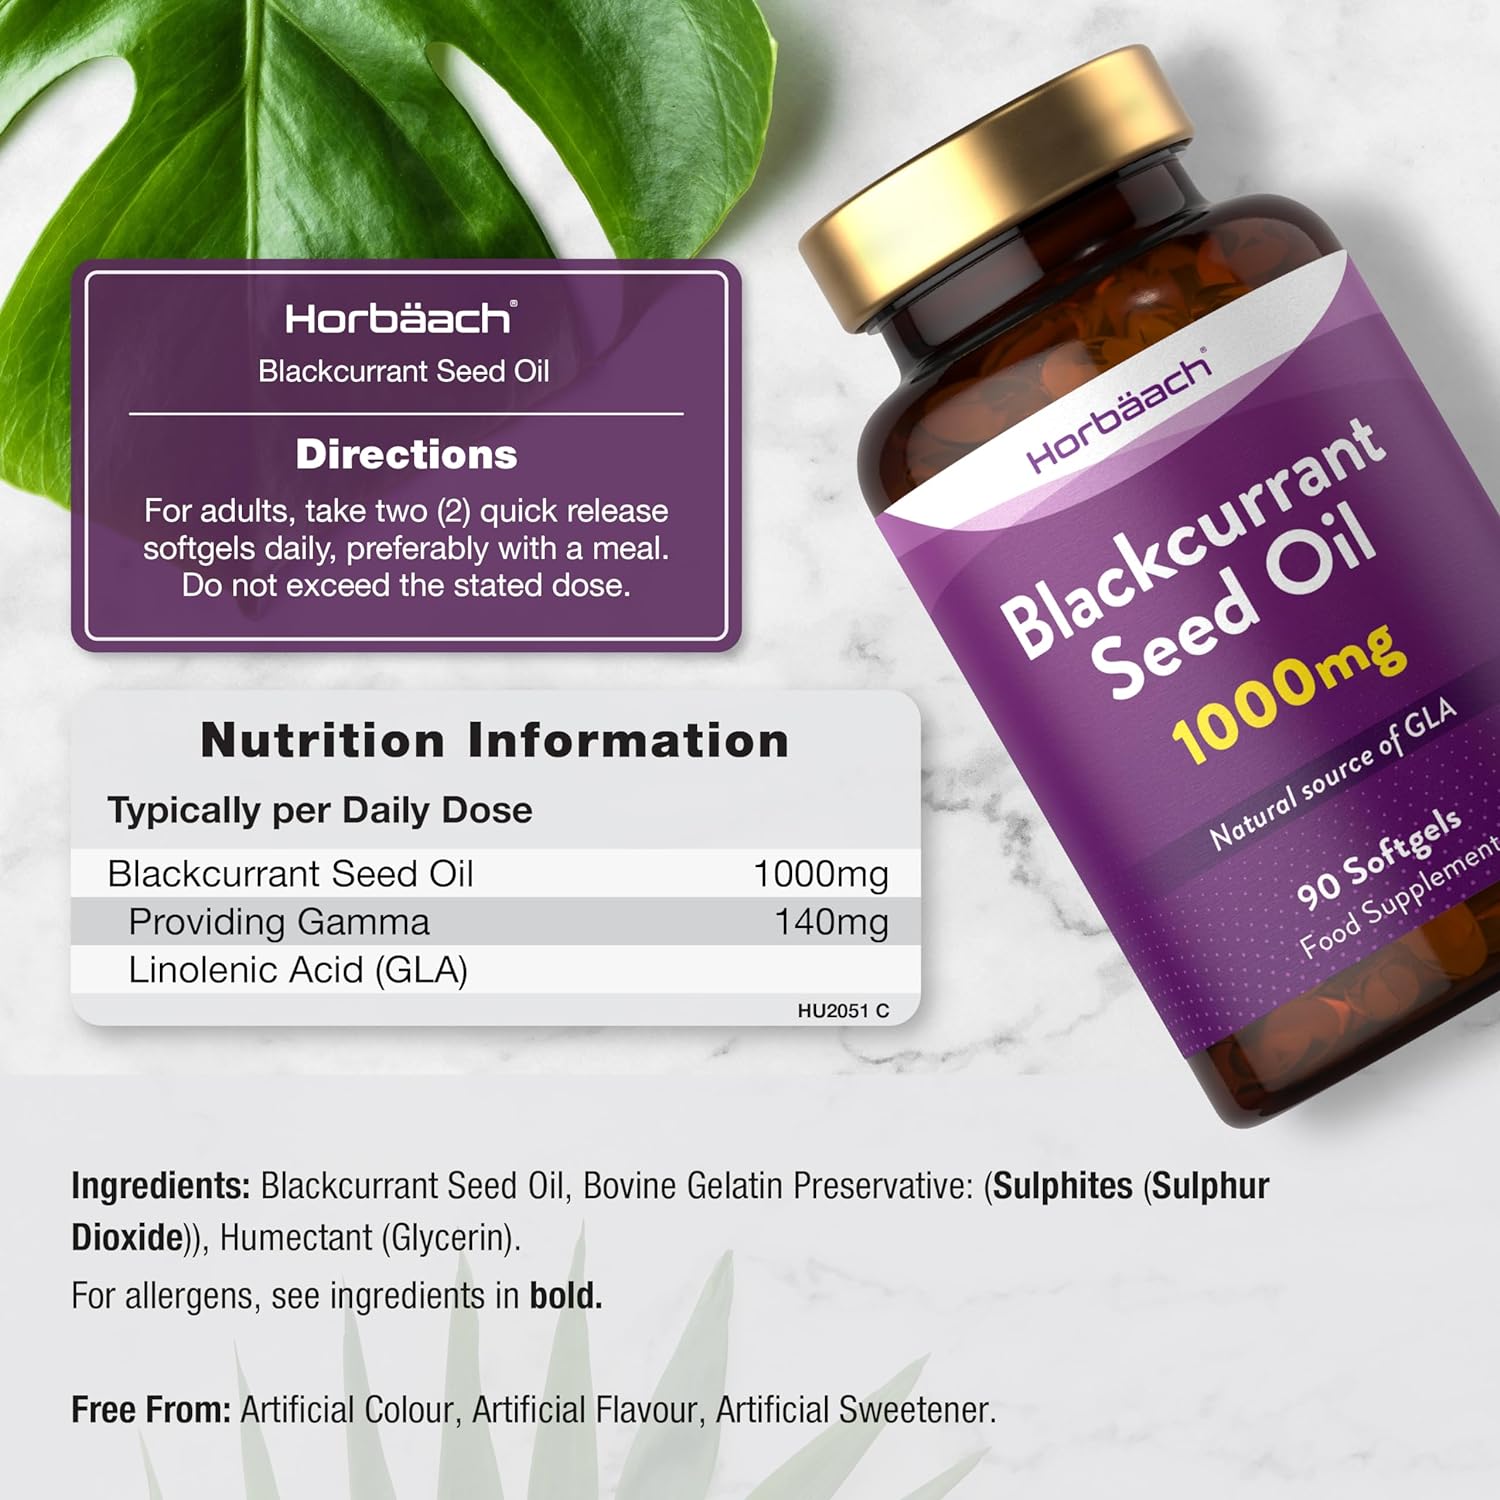 Blackcurrant Seed Oil 1000 mg | 90 Softgels